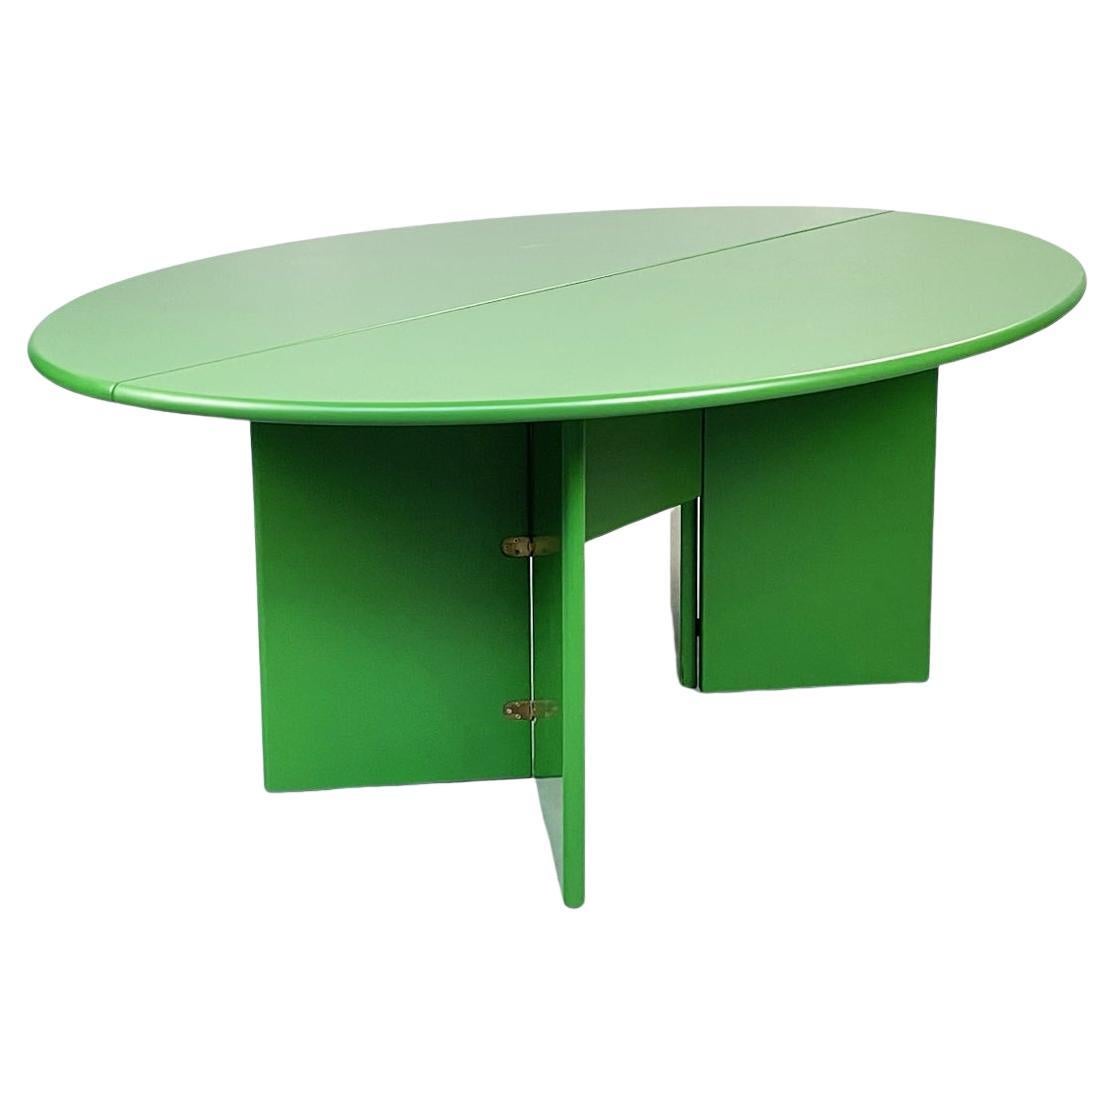 Italian Modern Wooden Green Table Antella by Takahama for Cassina, 1980s